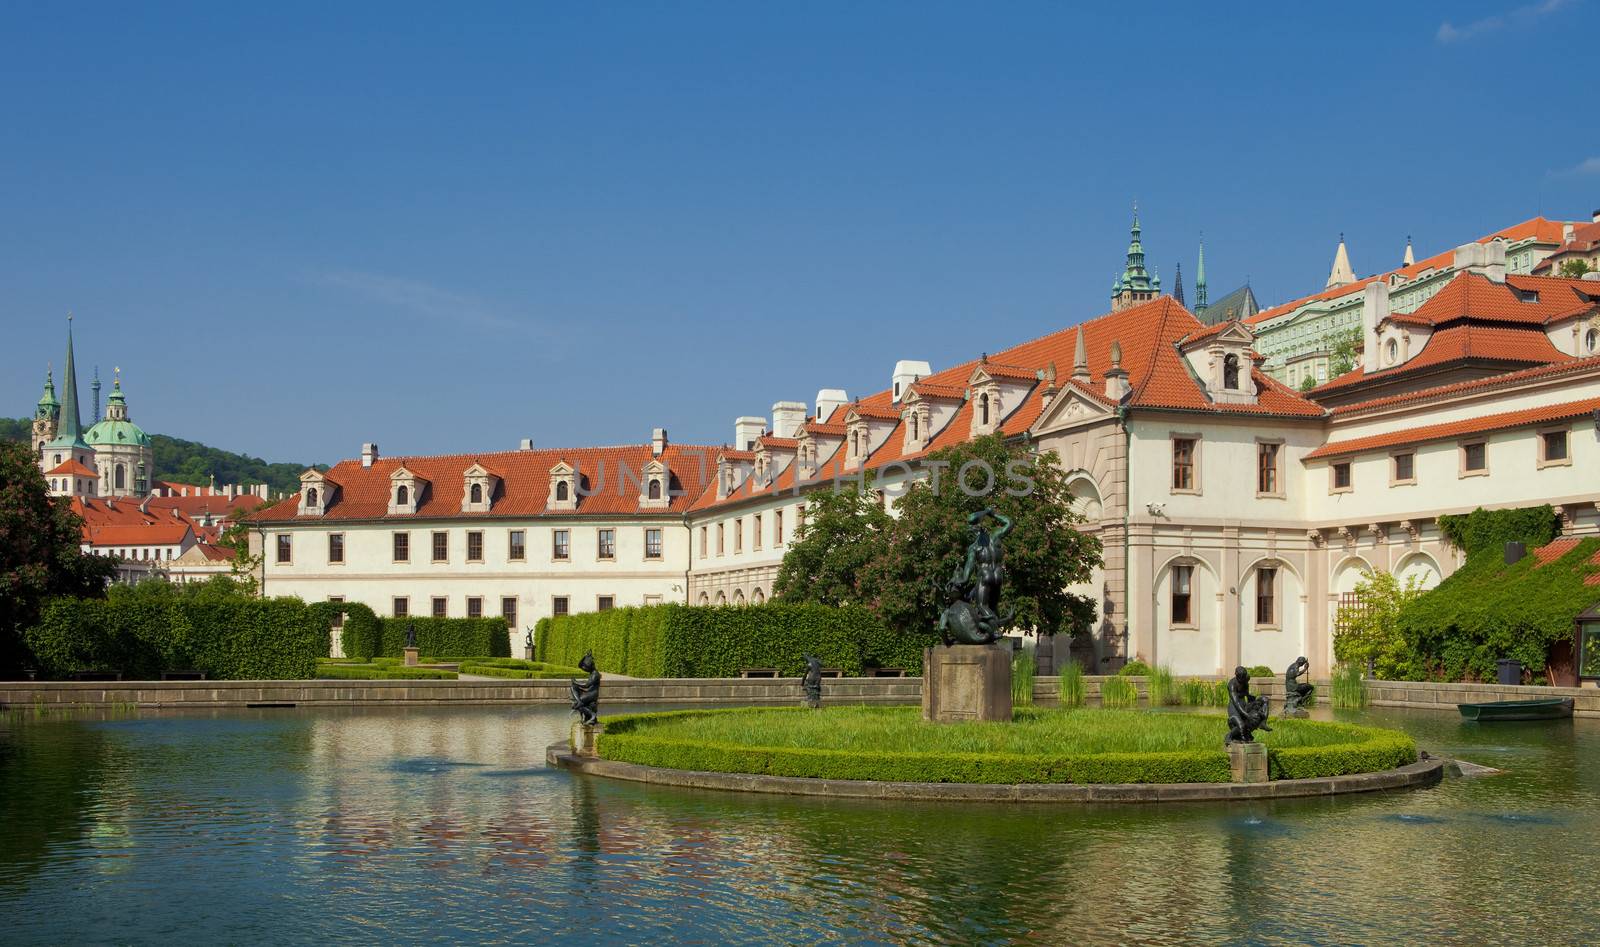 prague, czech republic - baroque wallenstein garden at mala strana